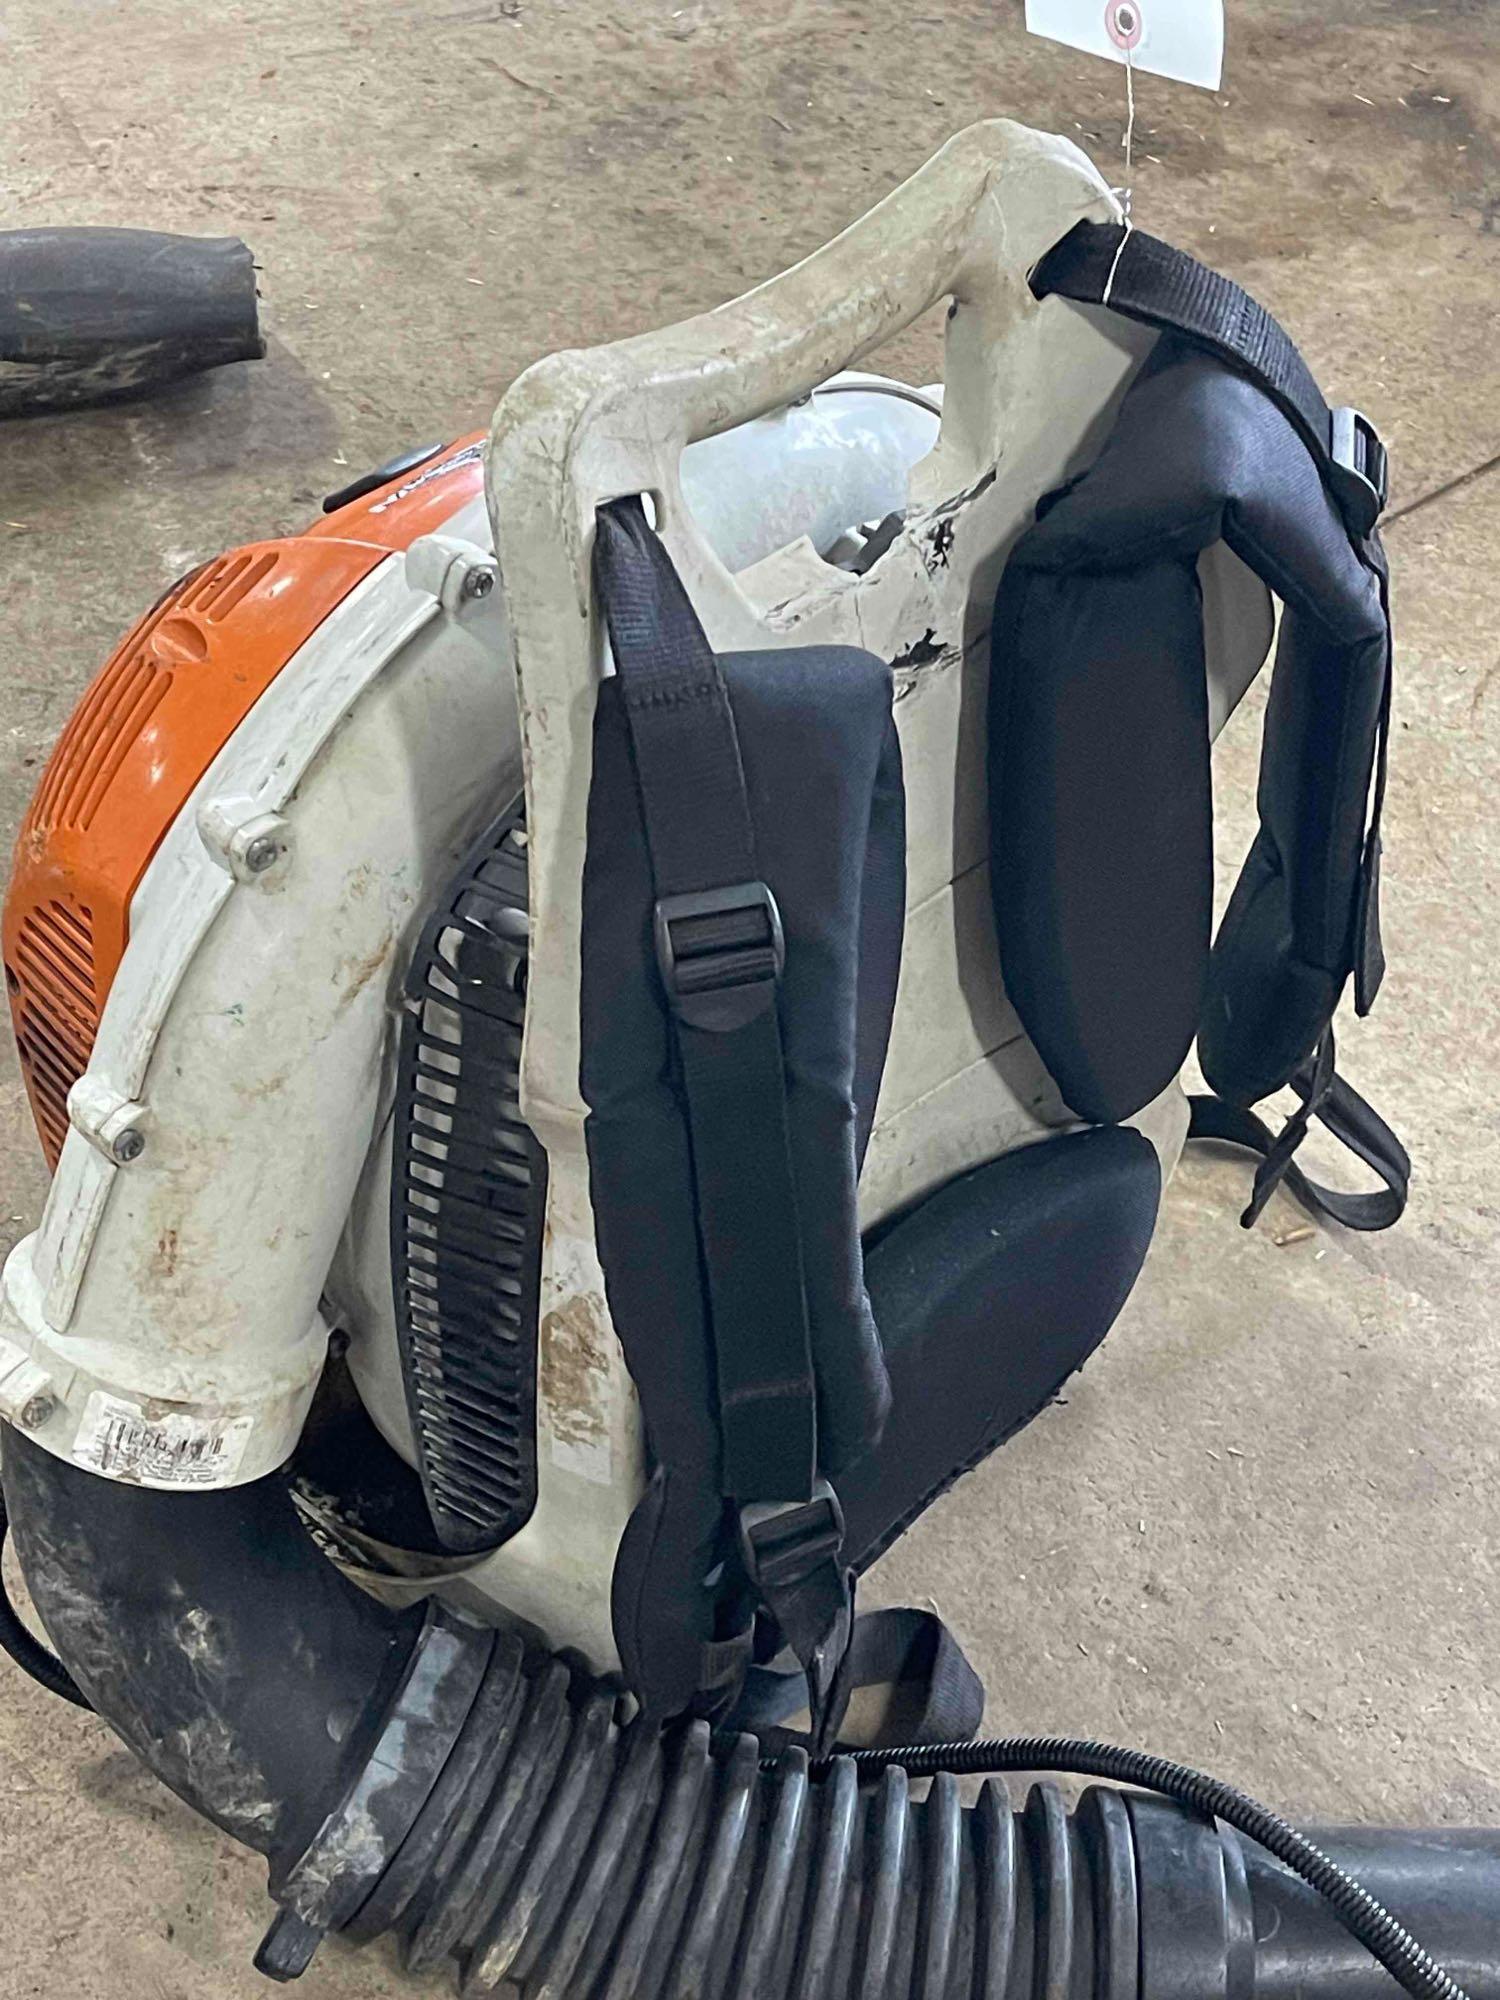 STIHL BR600 backpack blower, needs work